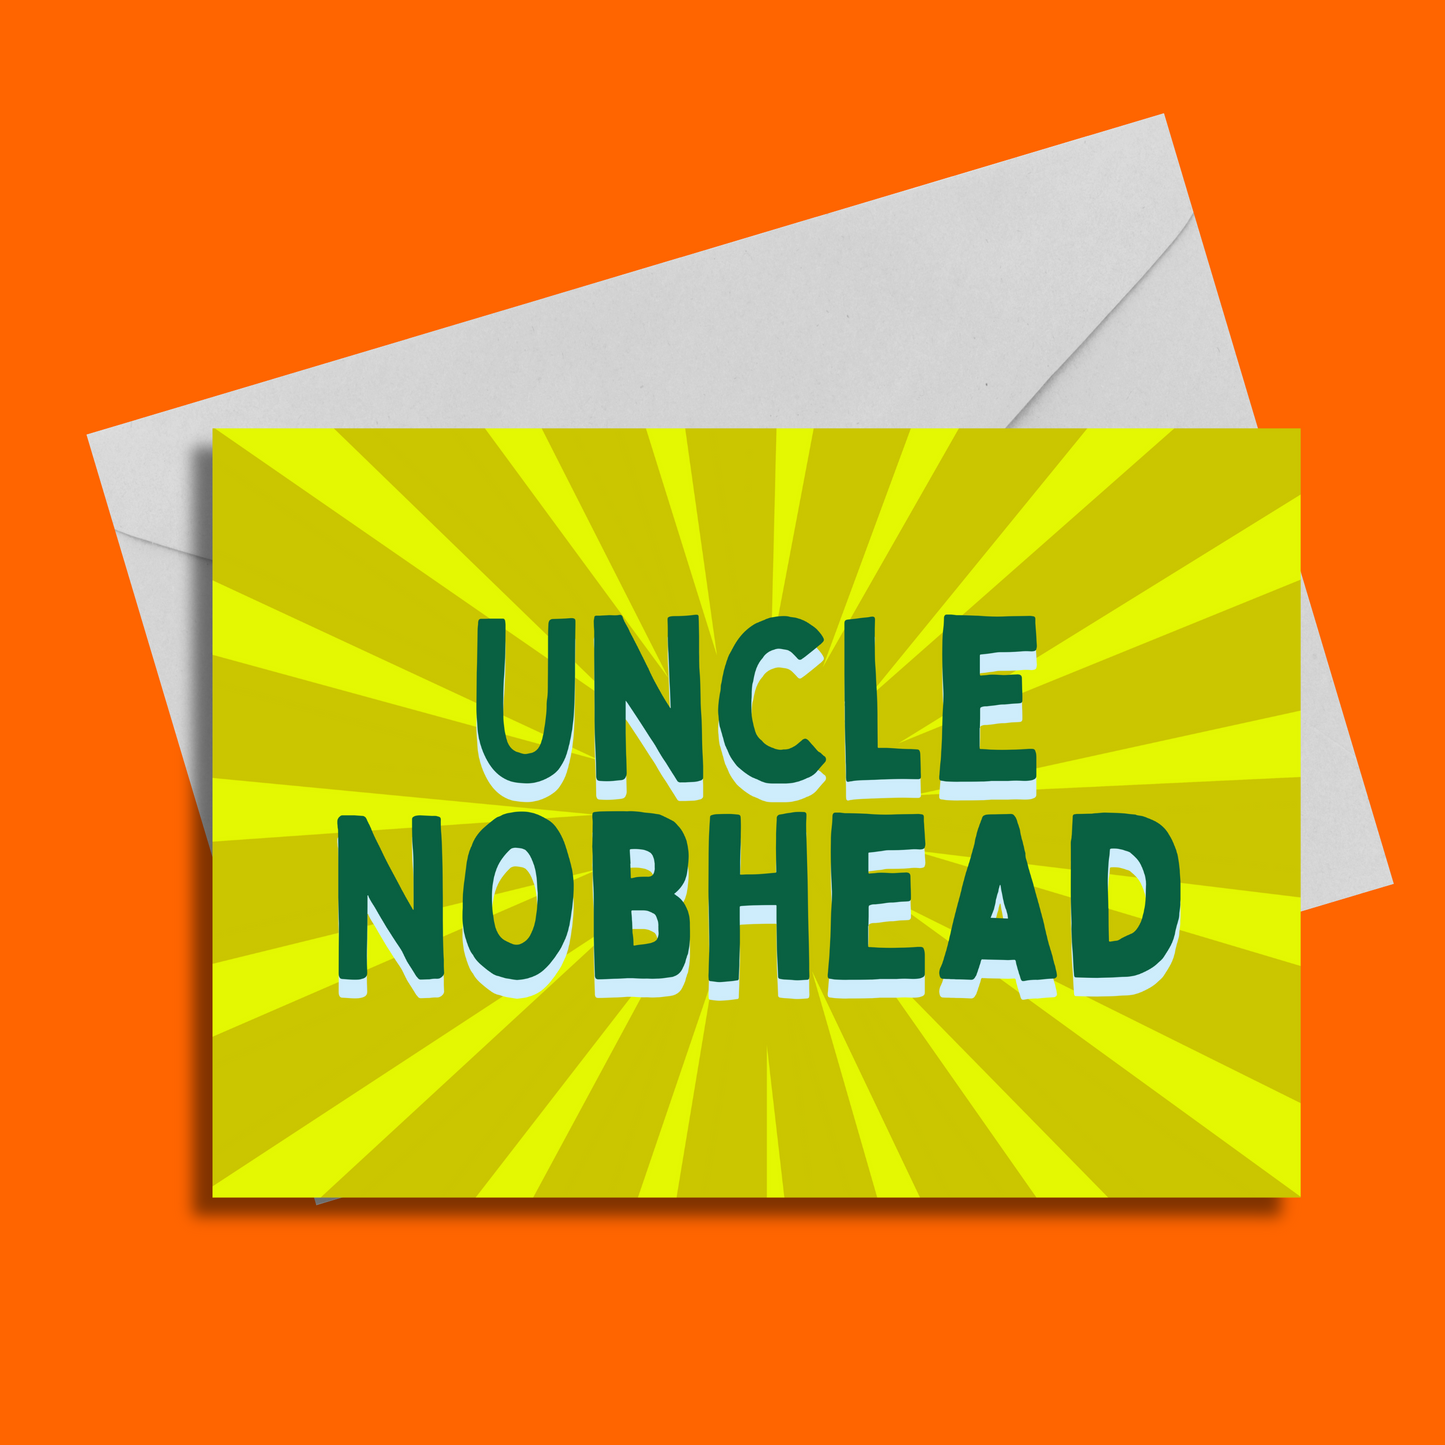 Uncle Nobhead (5x7” print/card)